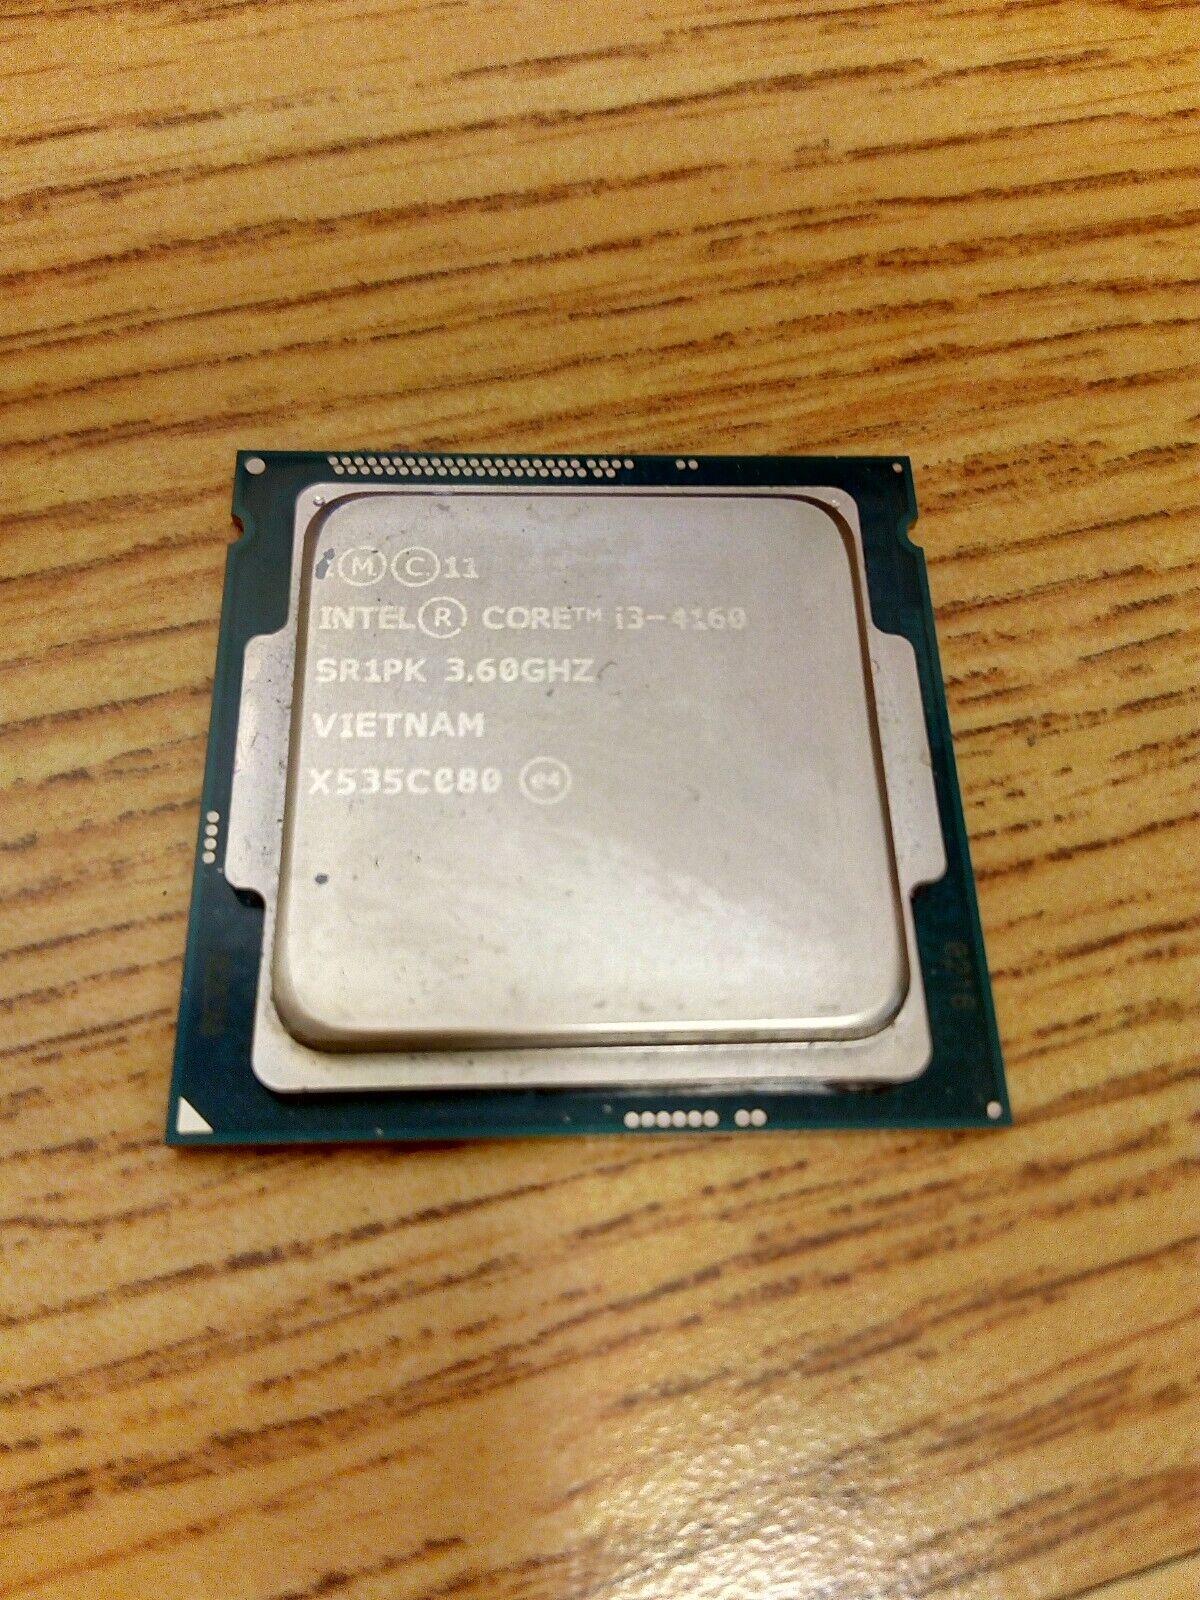 1 X Intel Core i3-4160  3.60 SR1Pk  CPU  Processor 